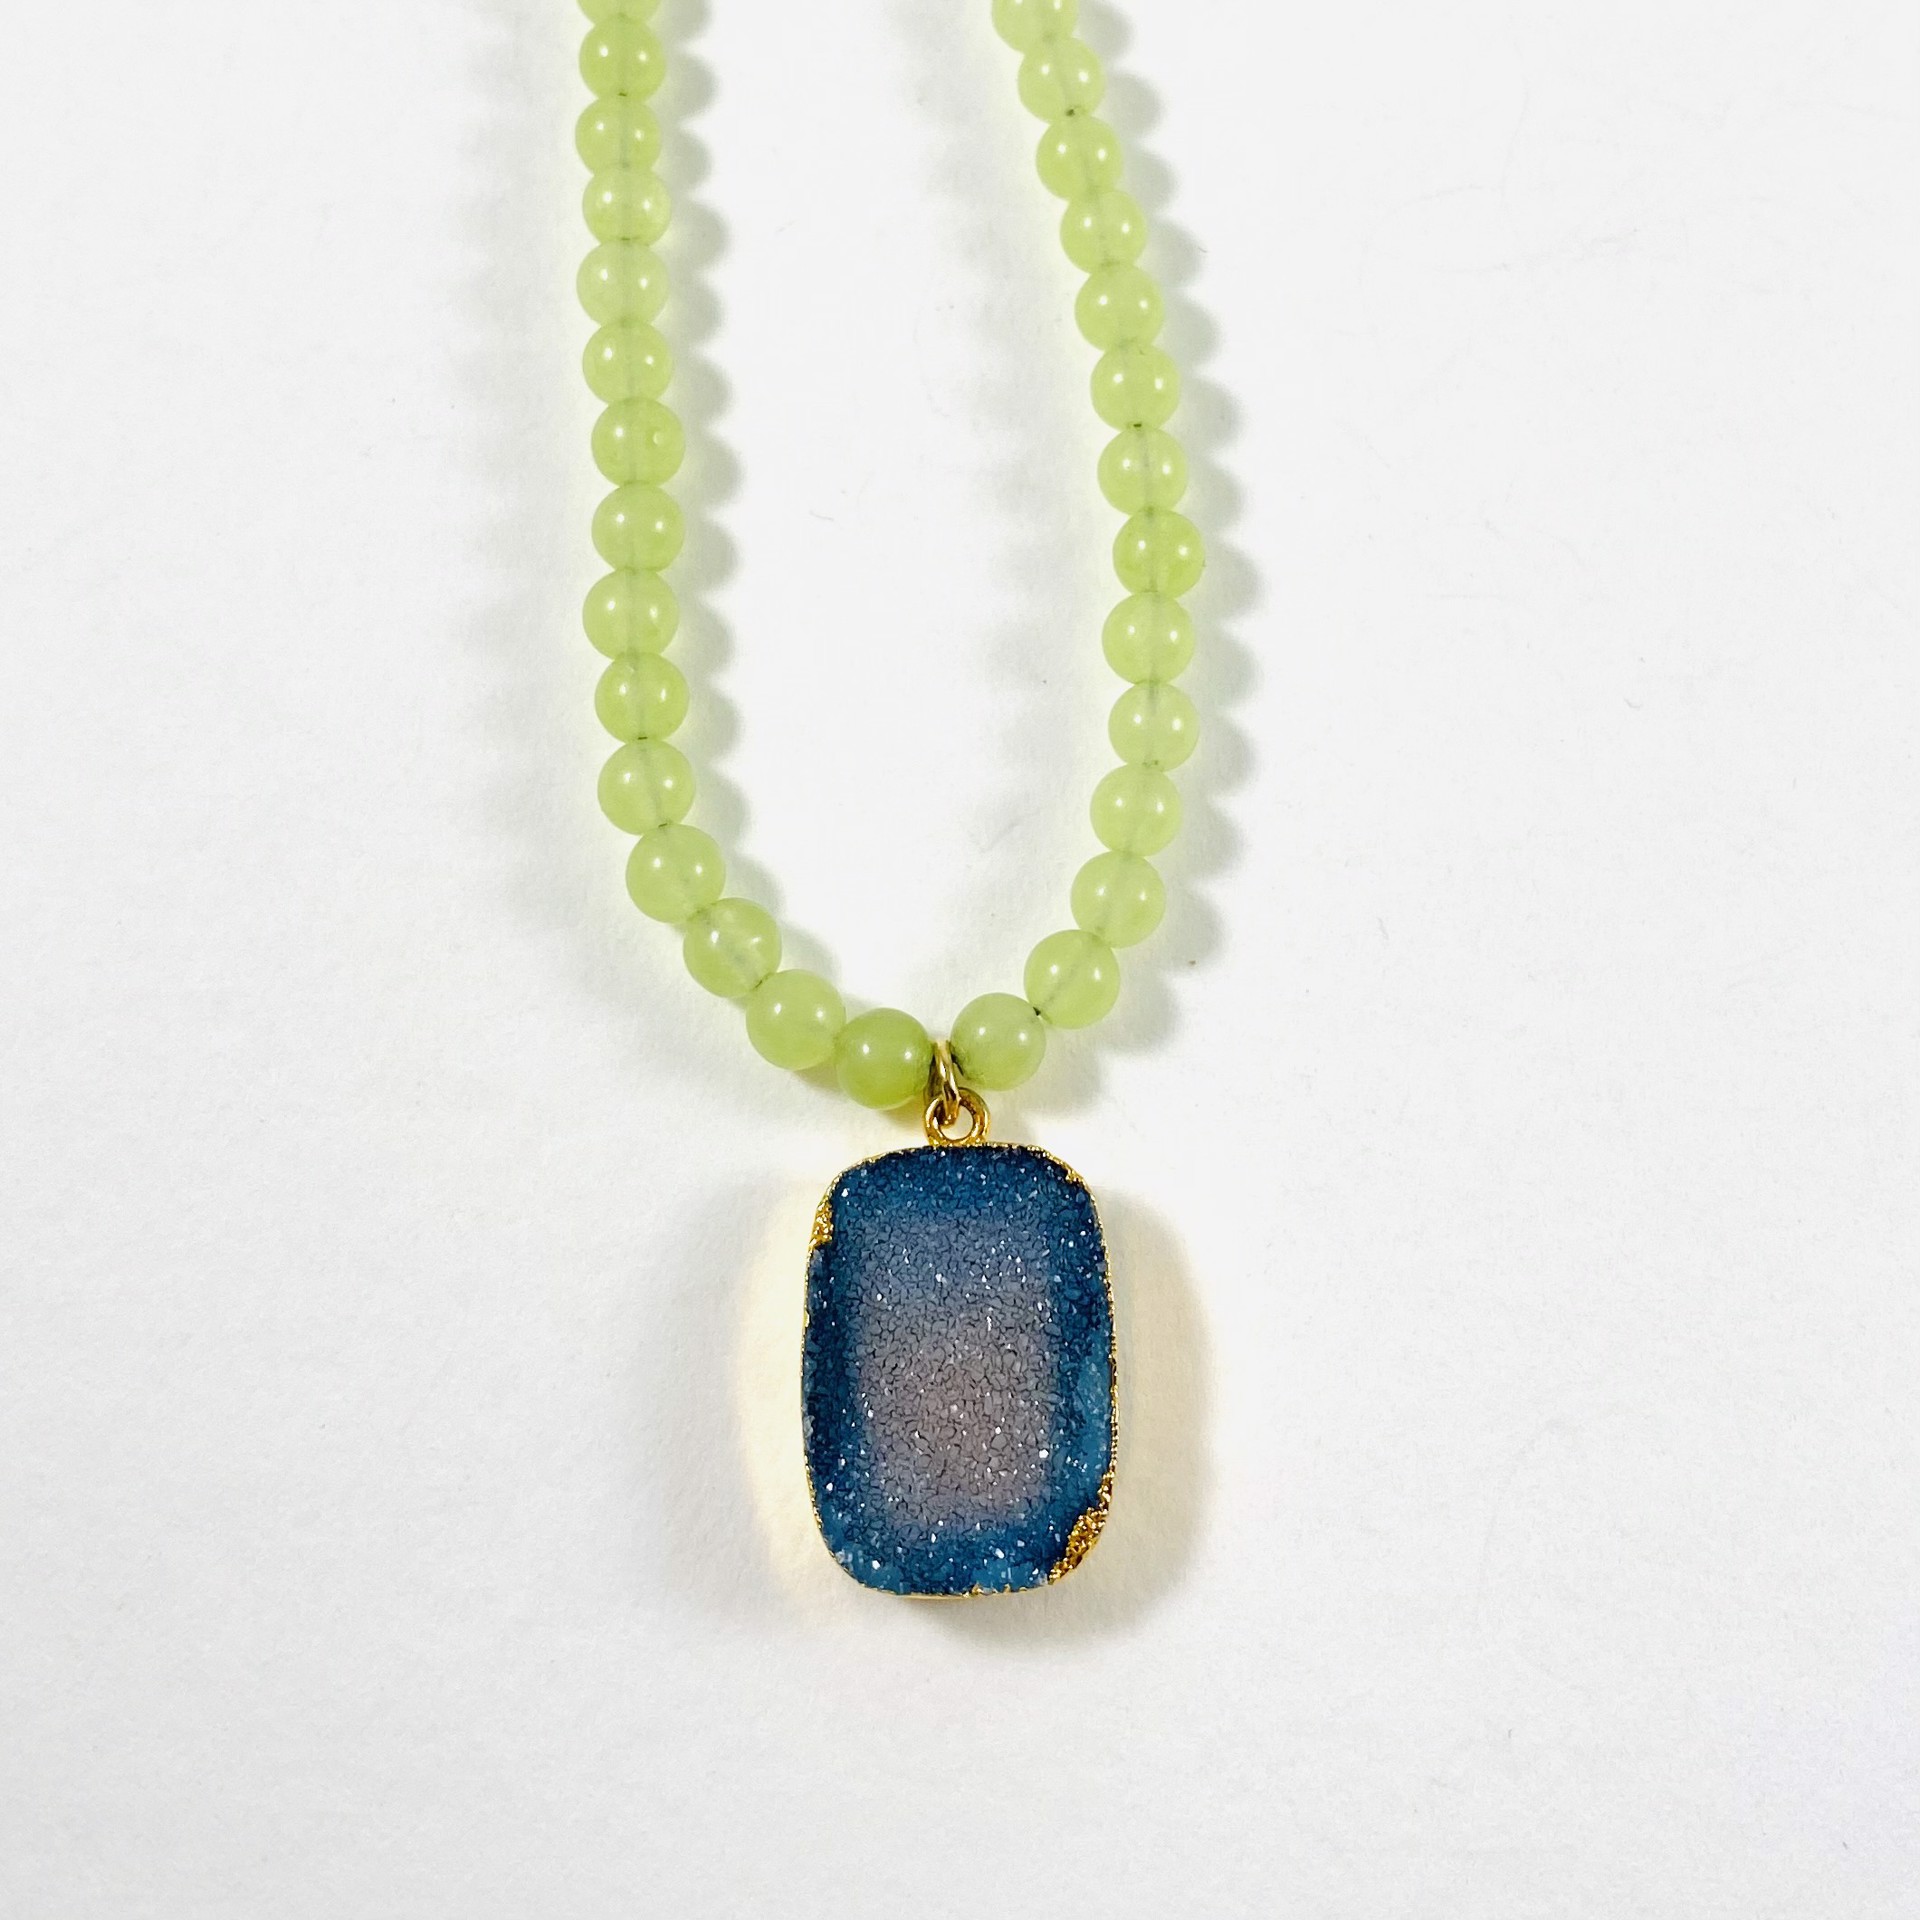 Olive Jade Bead Pale Blue Druzy Pendant Necklace by Nance Trueworthy